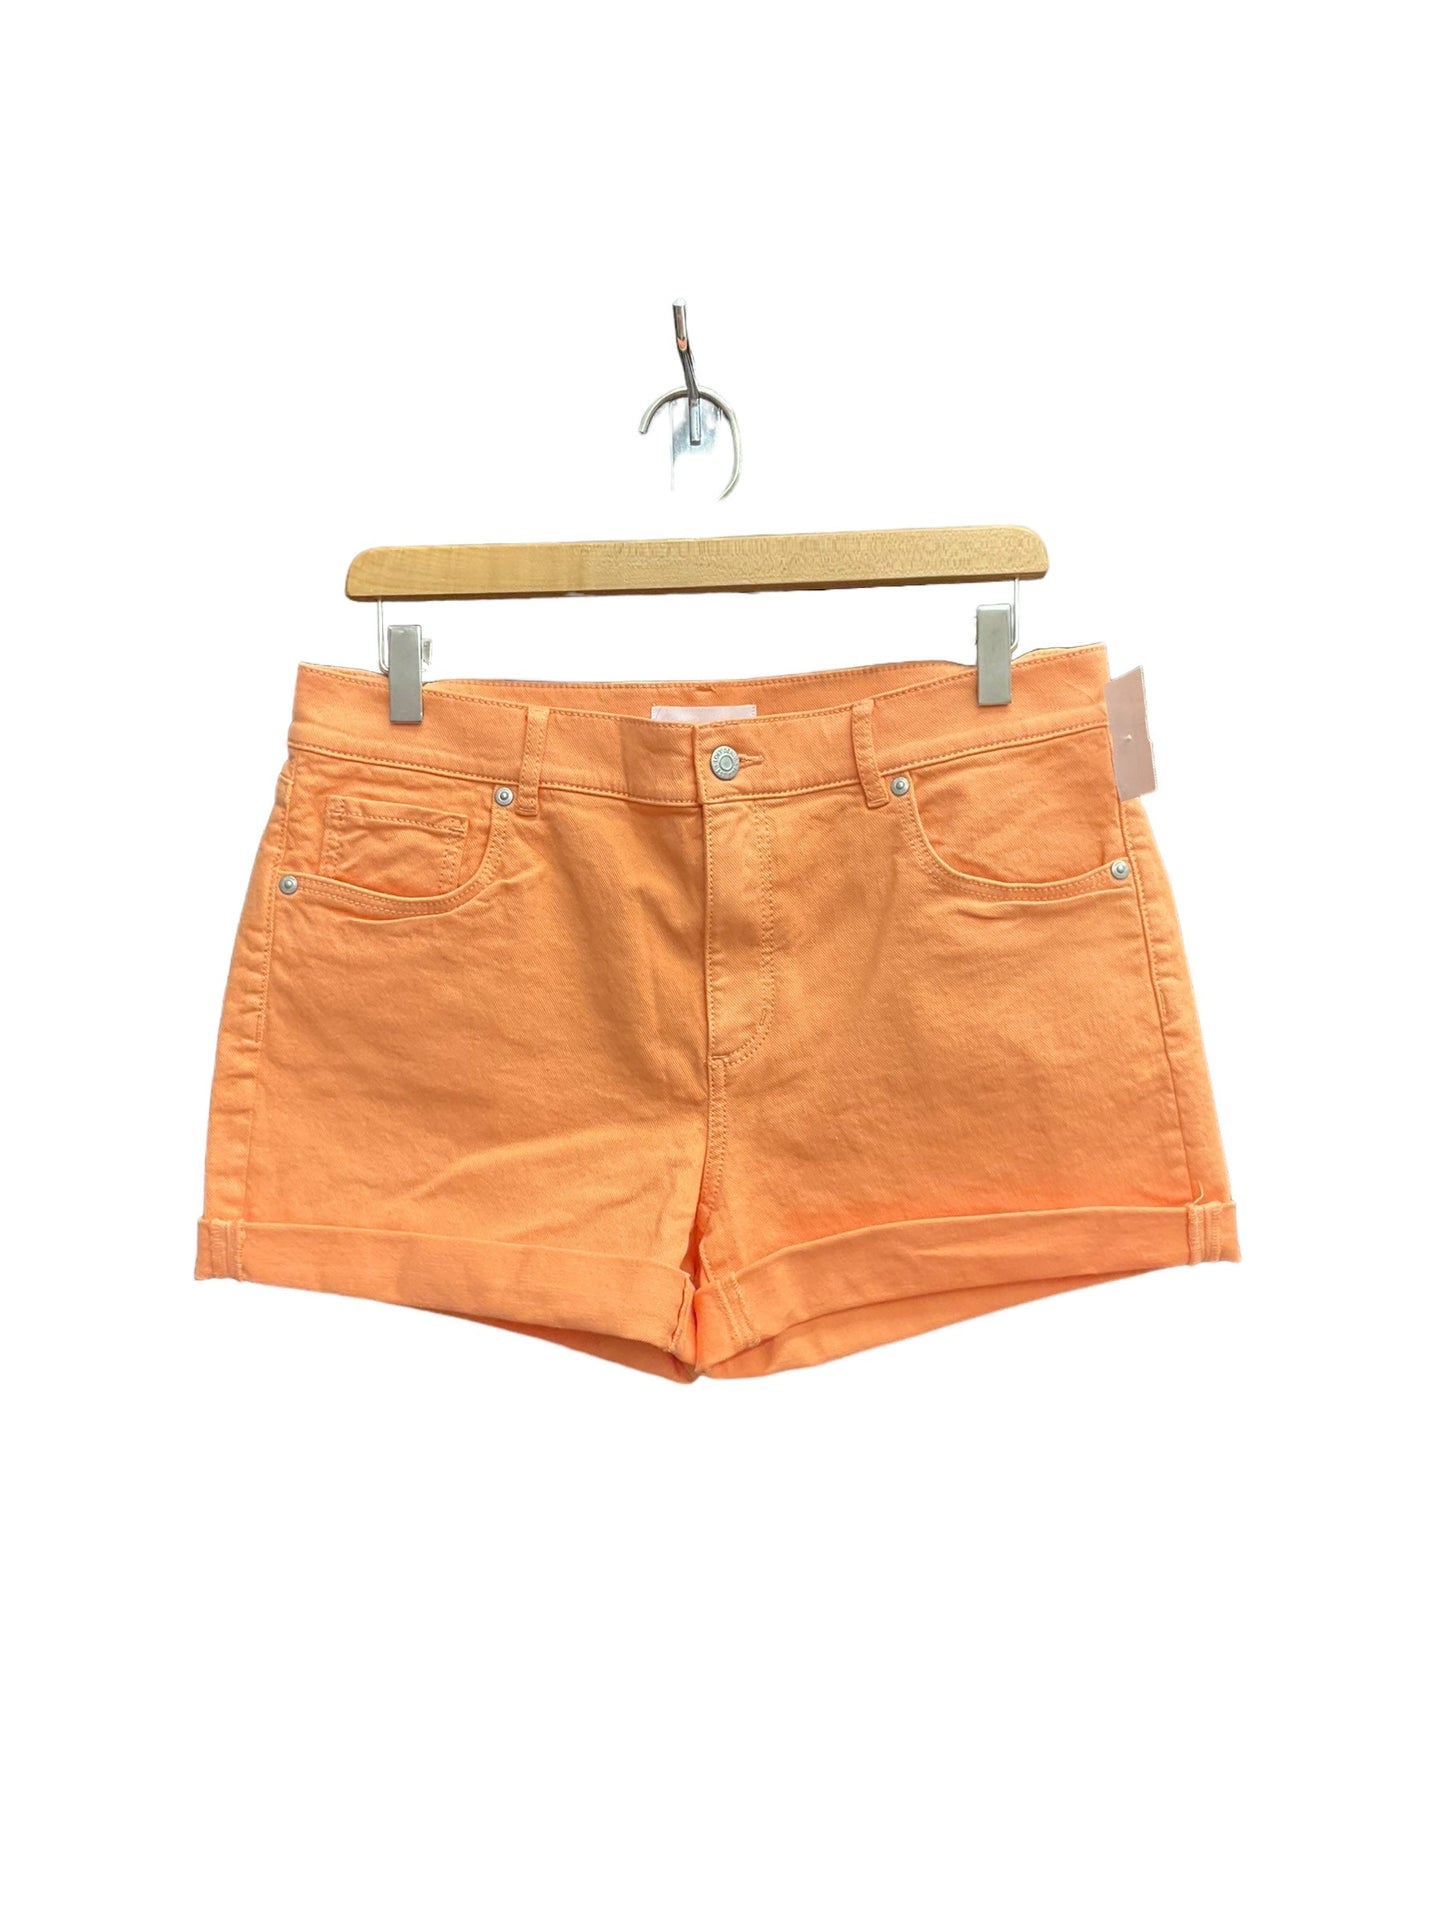 Peach Shorts Loft, Size 6